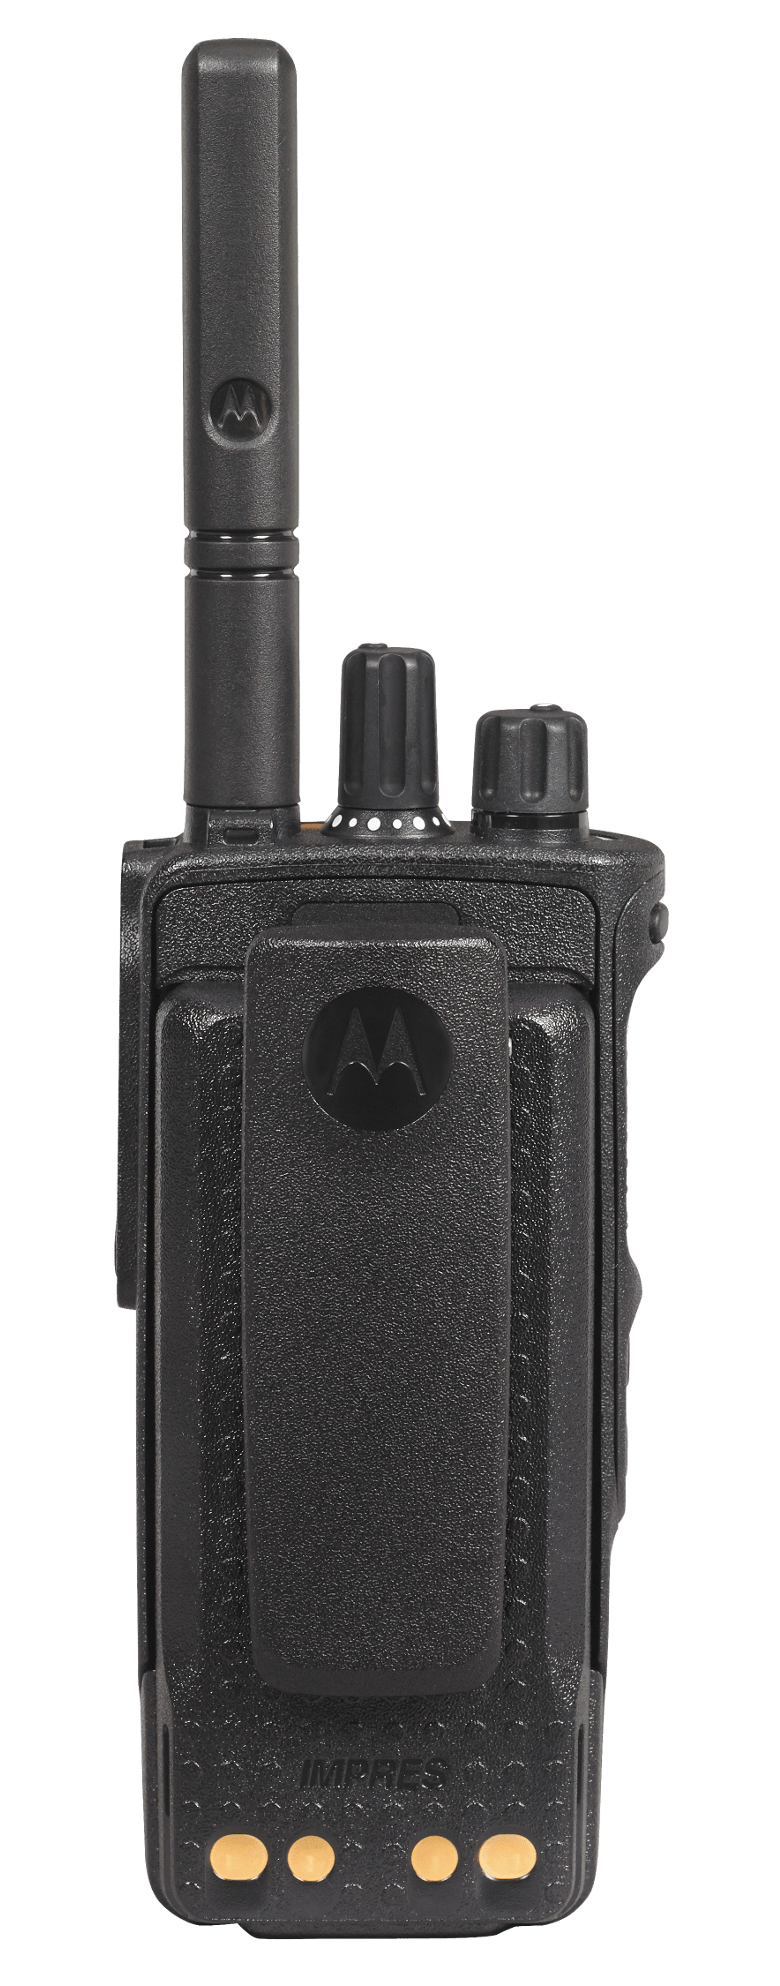 Motorola DP4800E UHF Portable DMR Radio